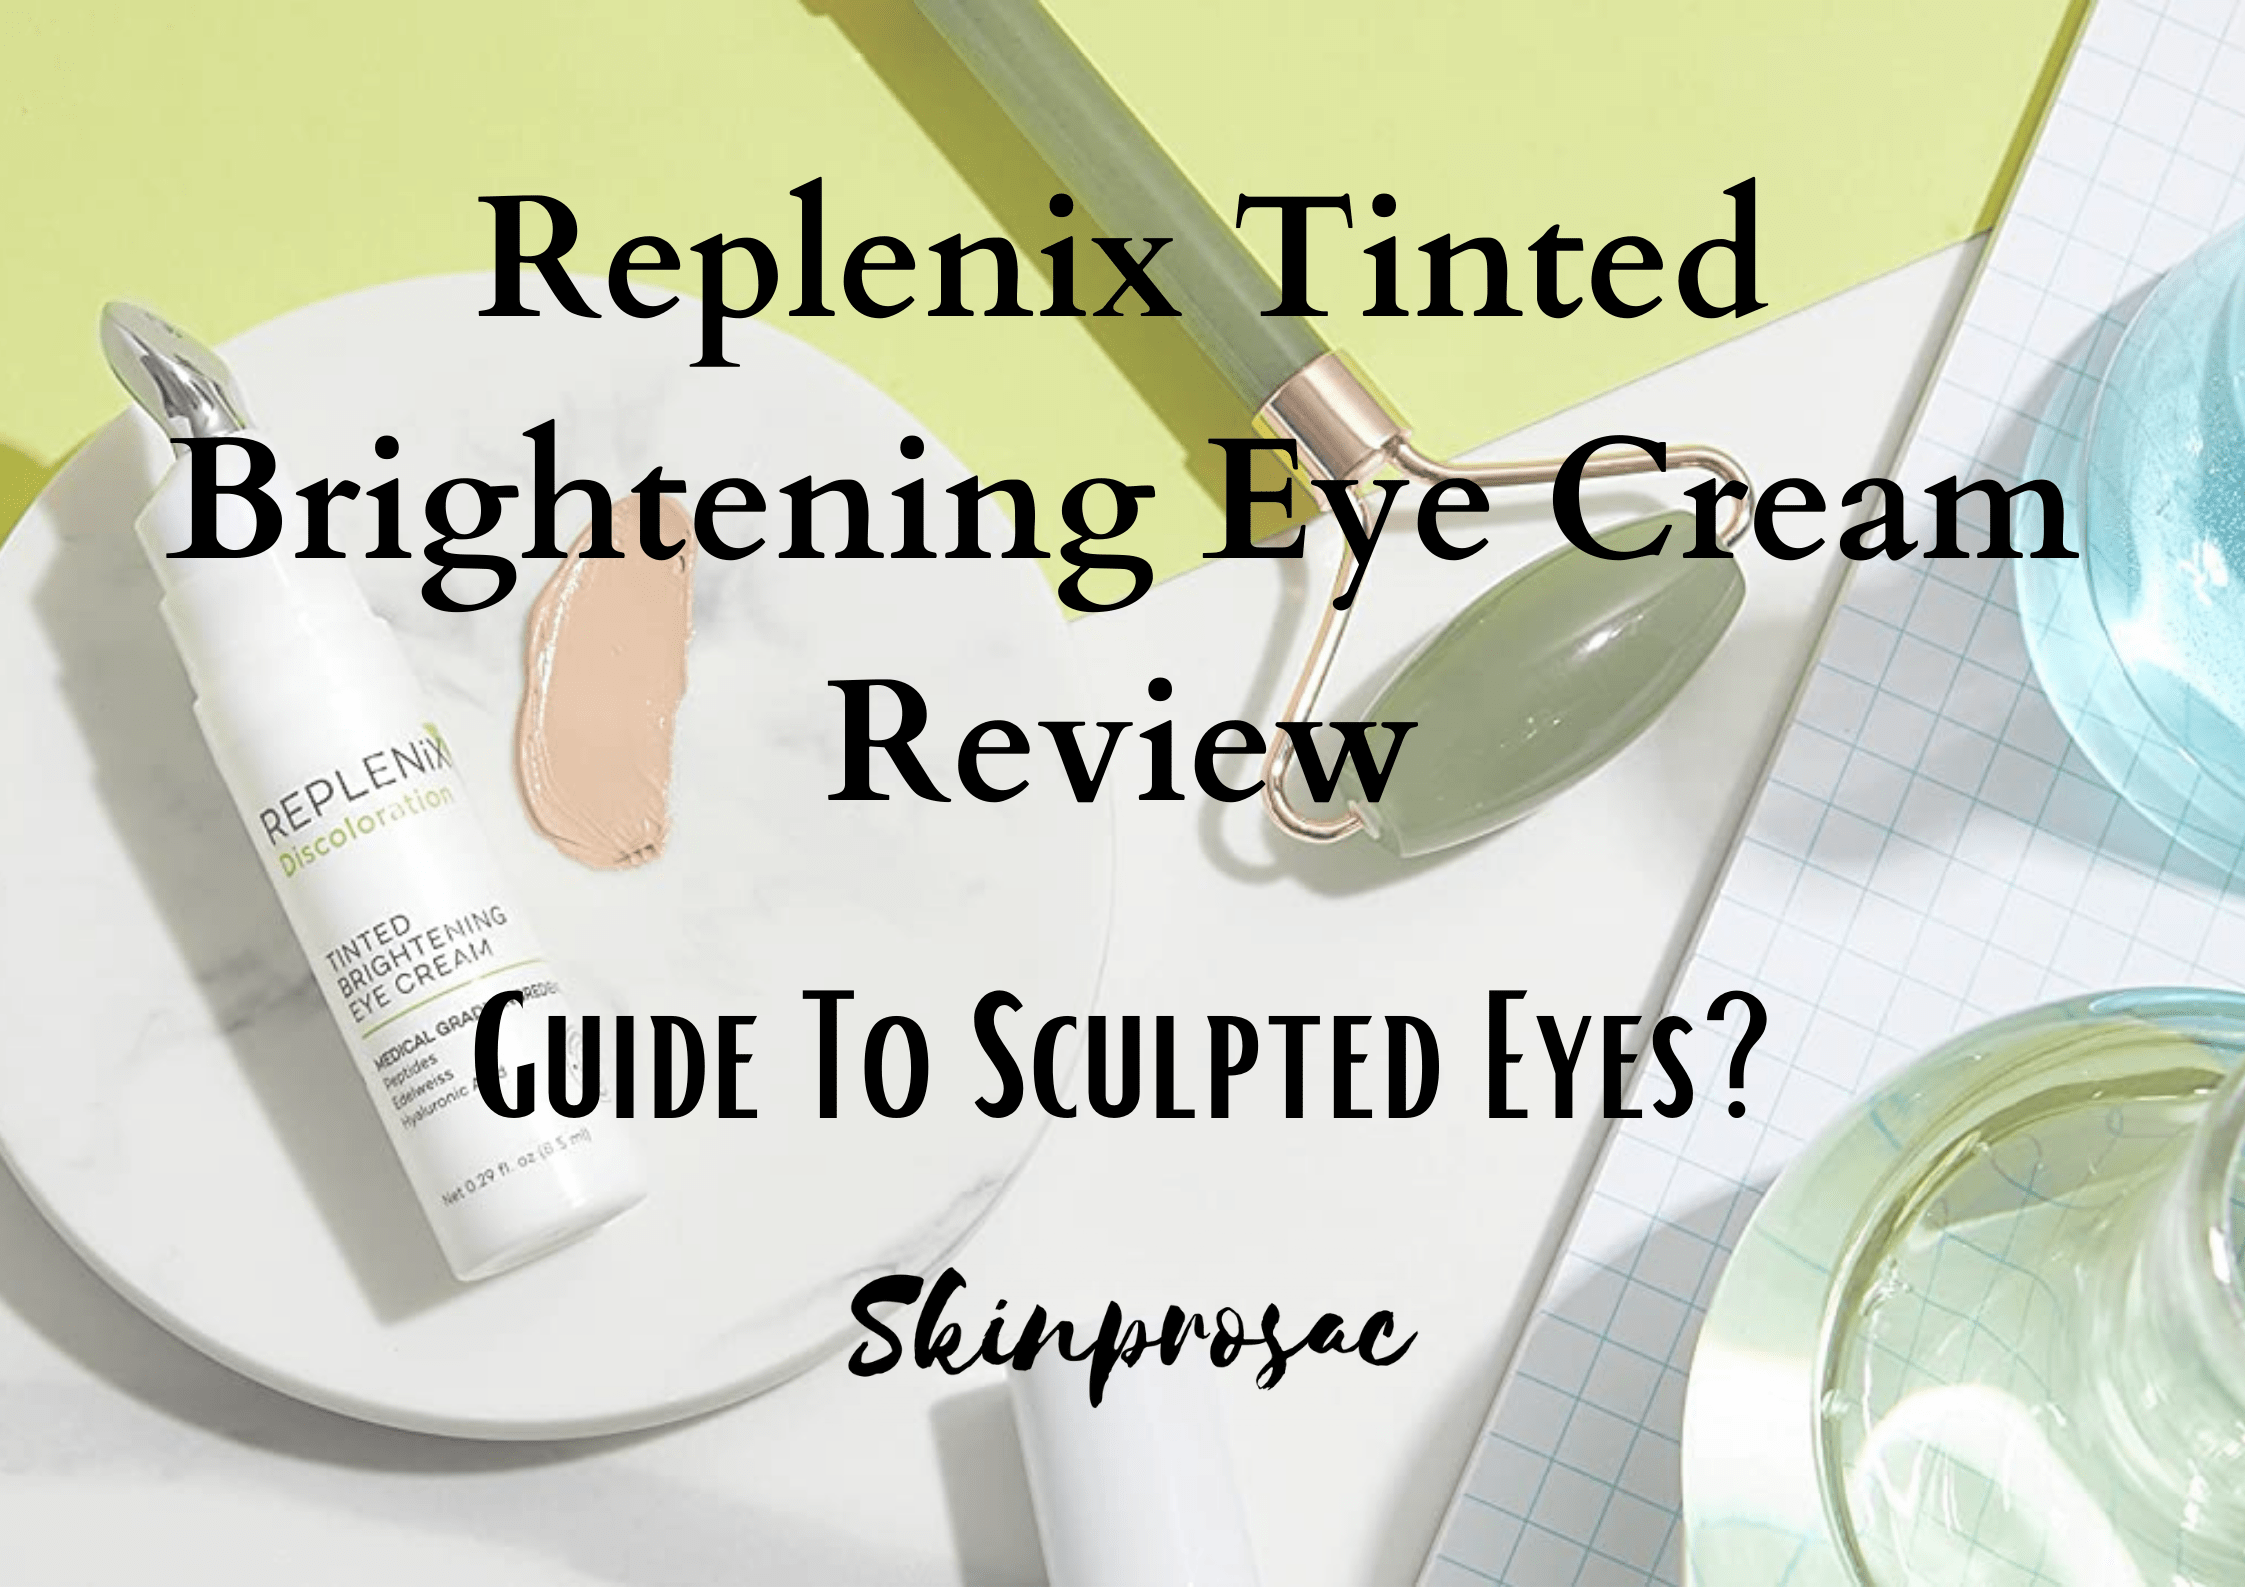 Replenix Tinted Brightening Eye Cream Reviews